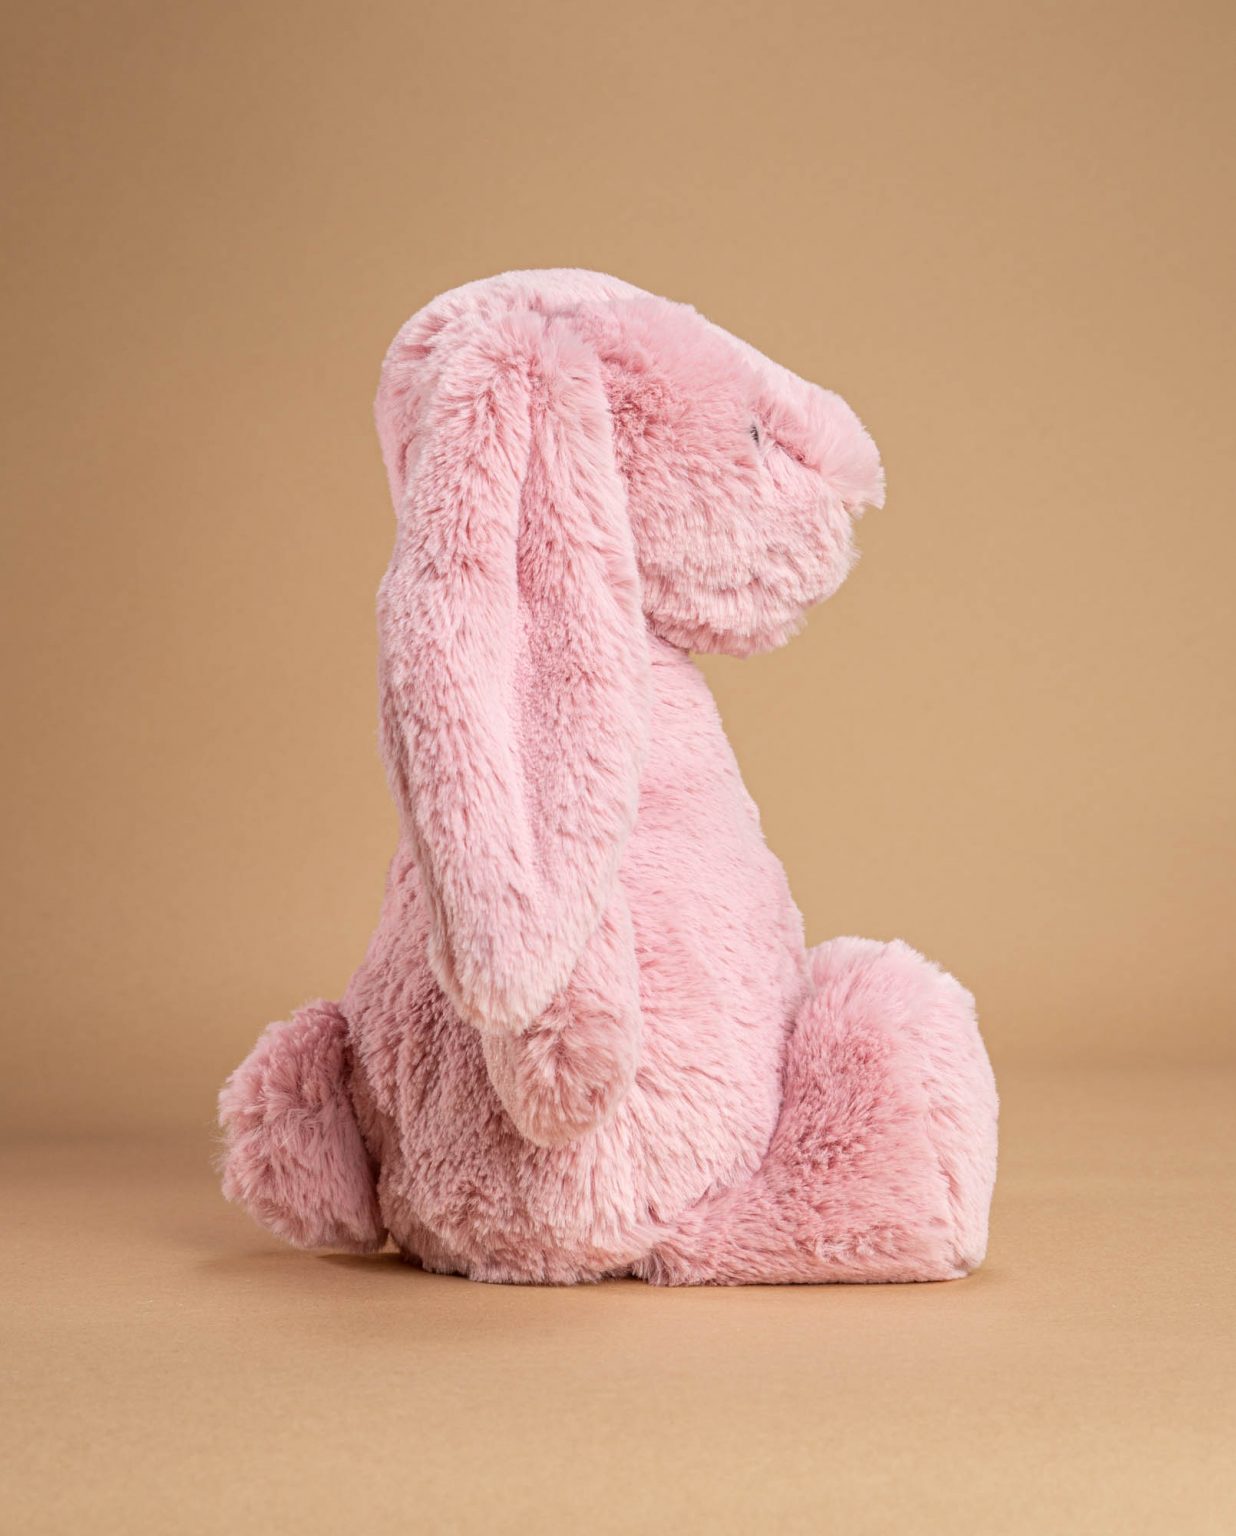 Jellycat Medium Tulip bunny soft toy gift - Send a Cuddly